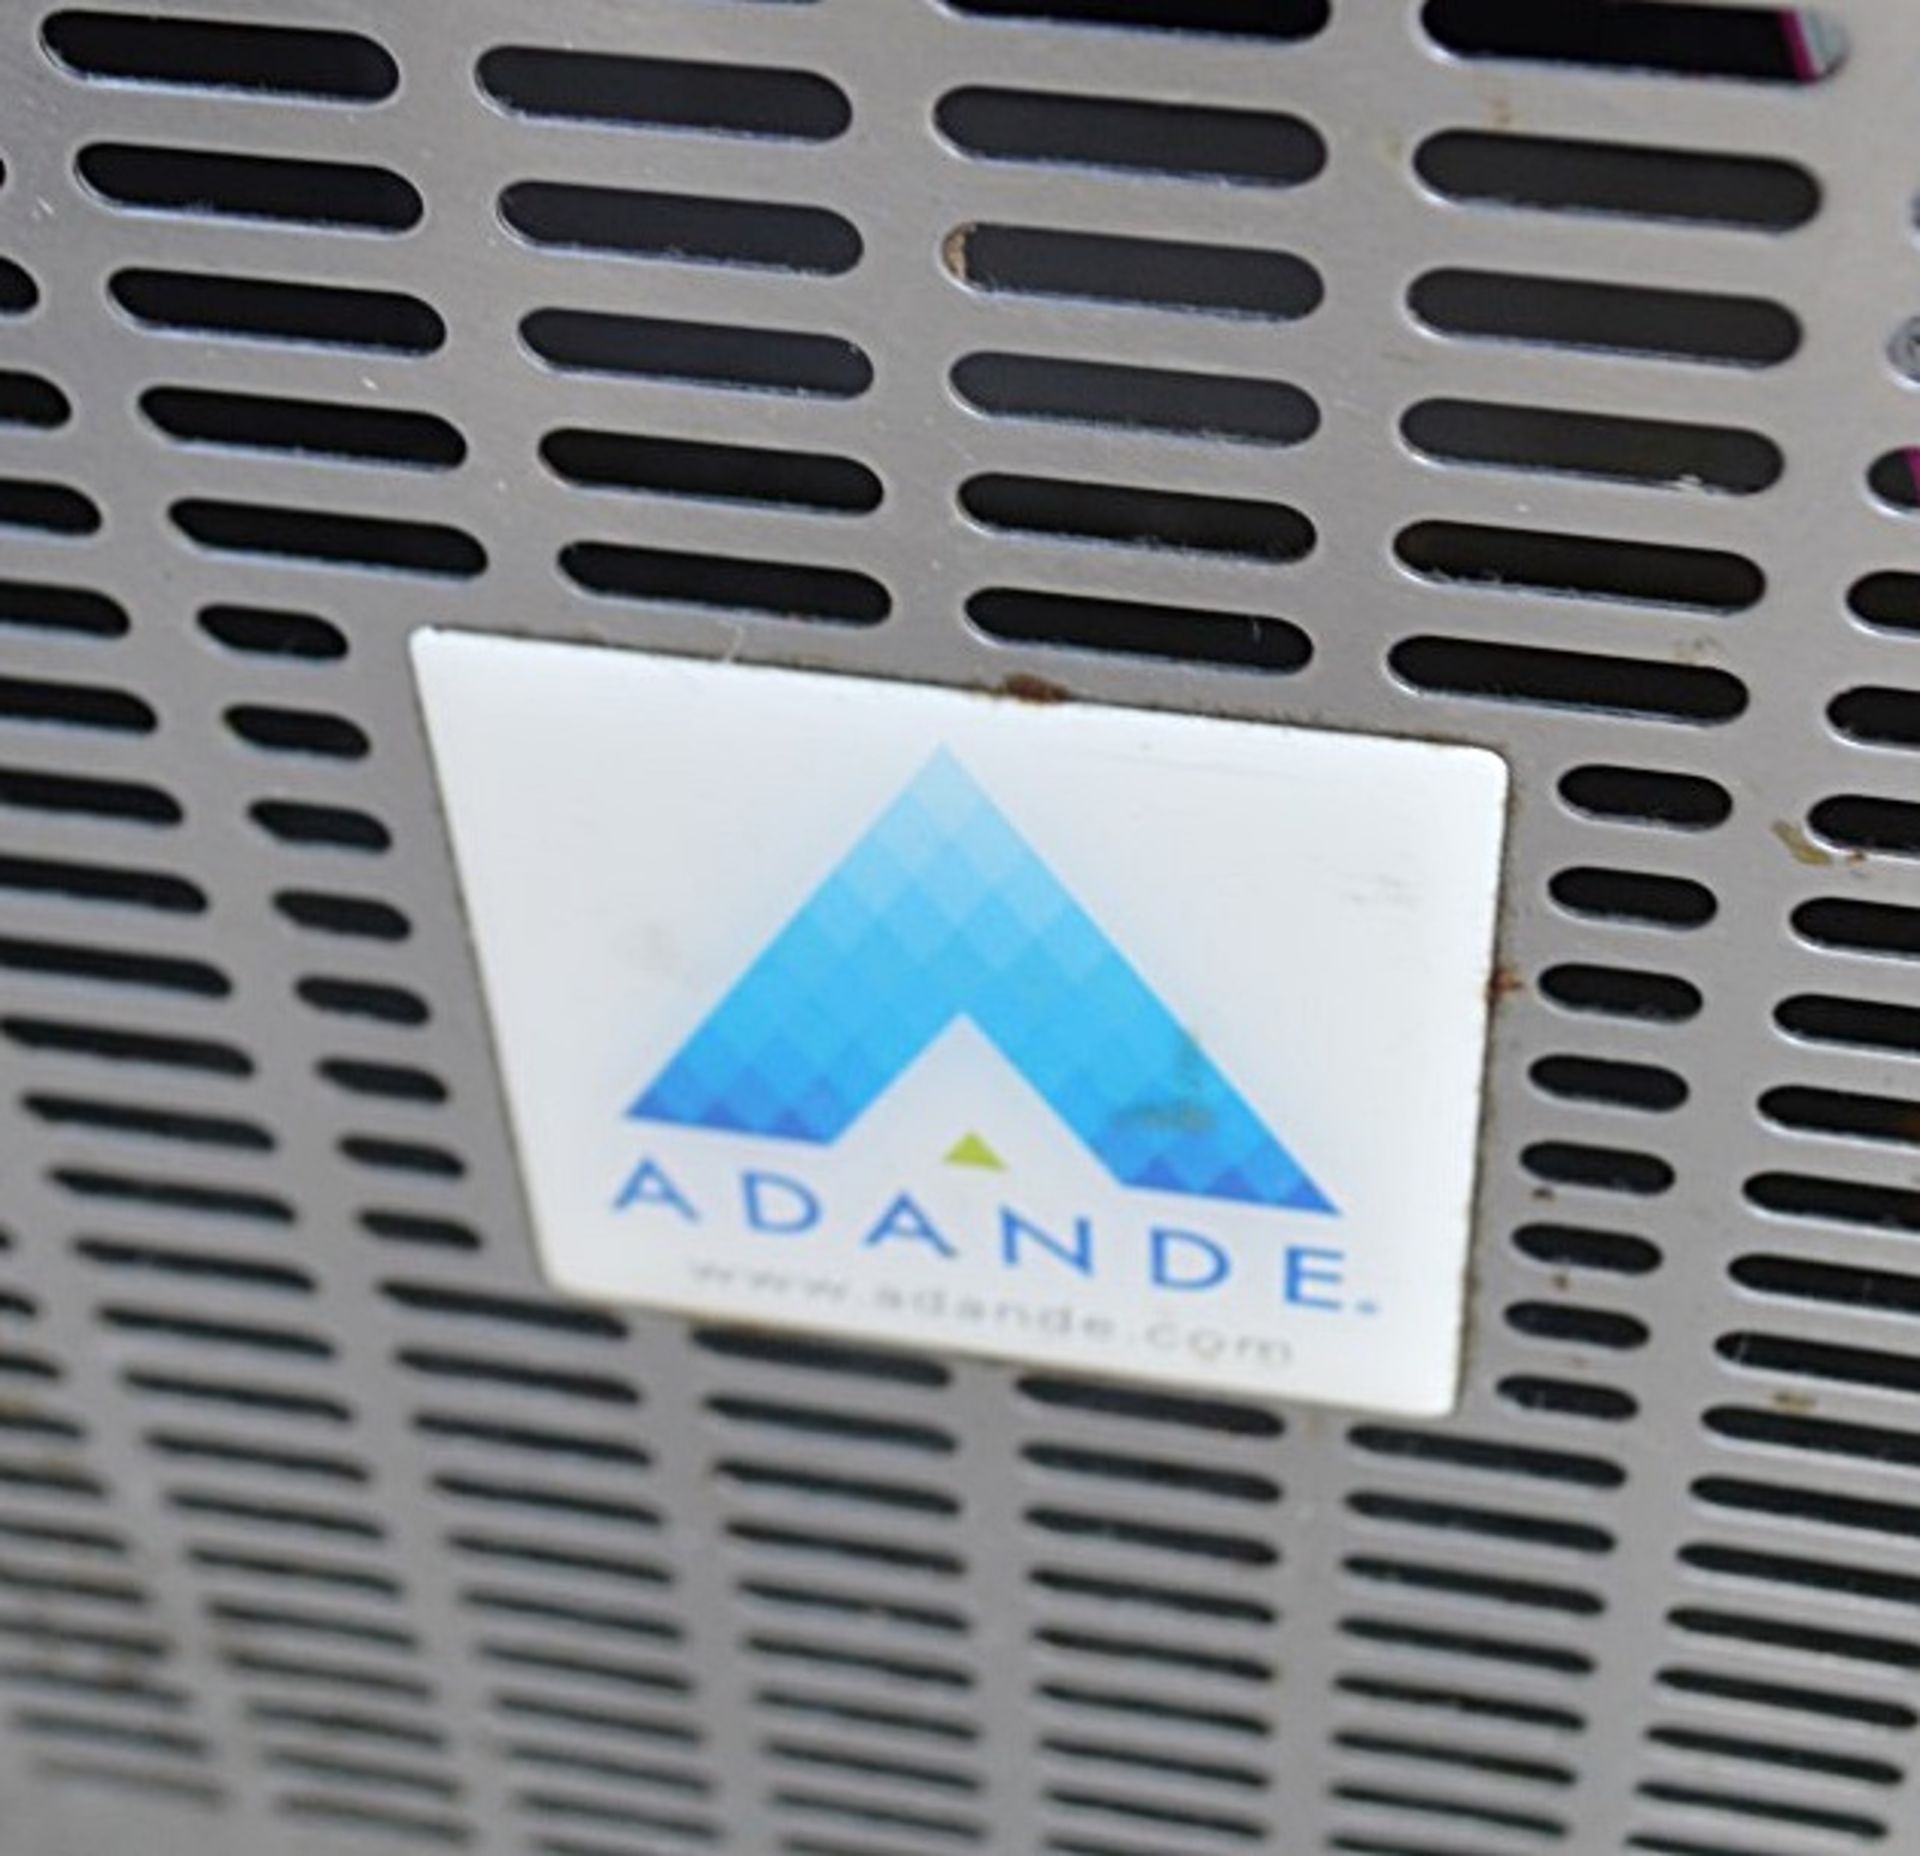 1 x ADANDE VCS Commercial Under Counter Single Drawer Fridge Unit - Dimensions: H49 x W110 x D70cm - - Image 2 of 2